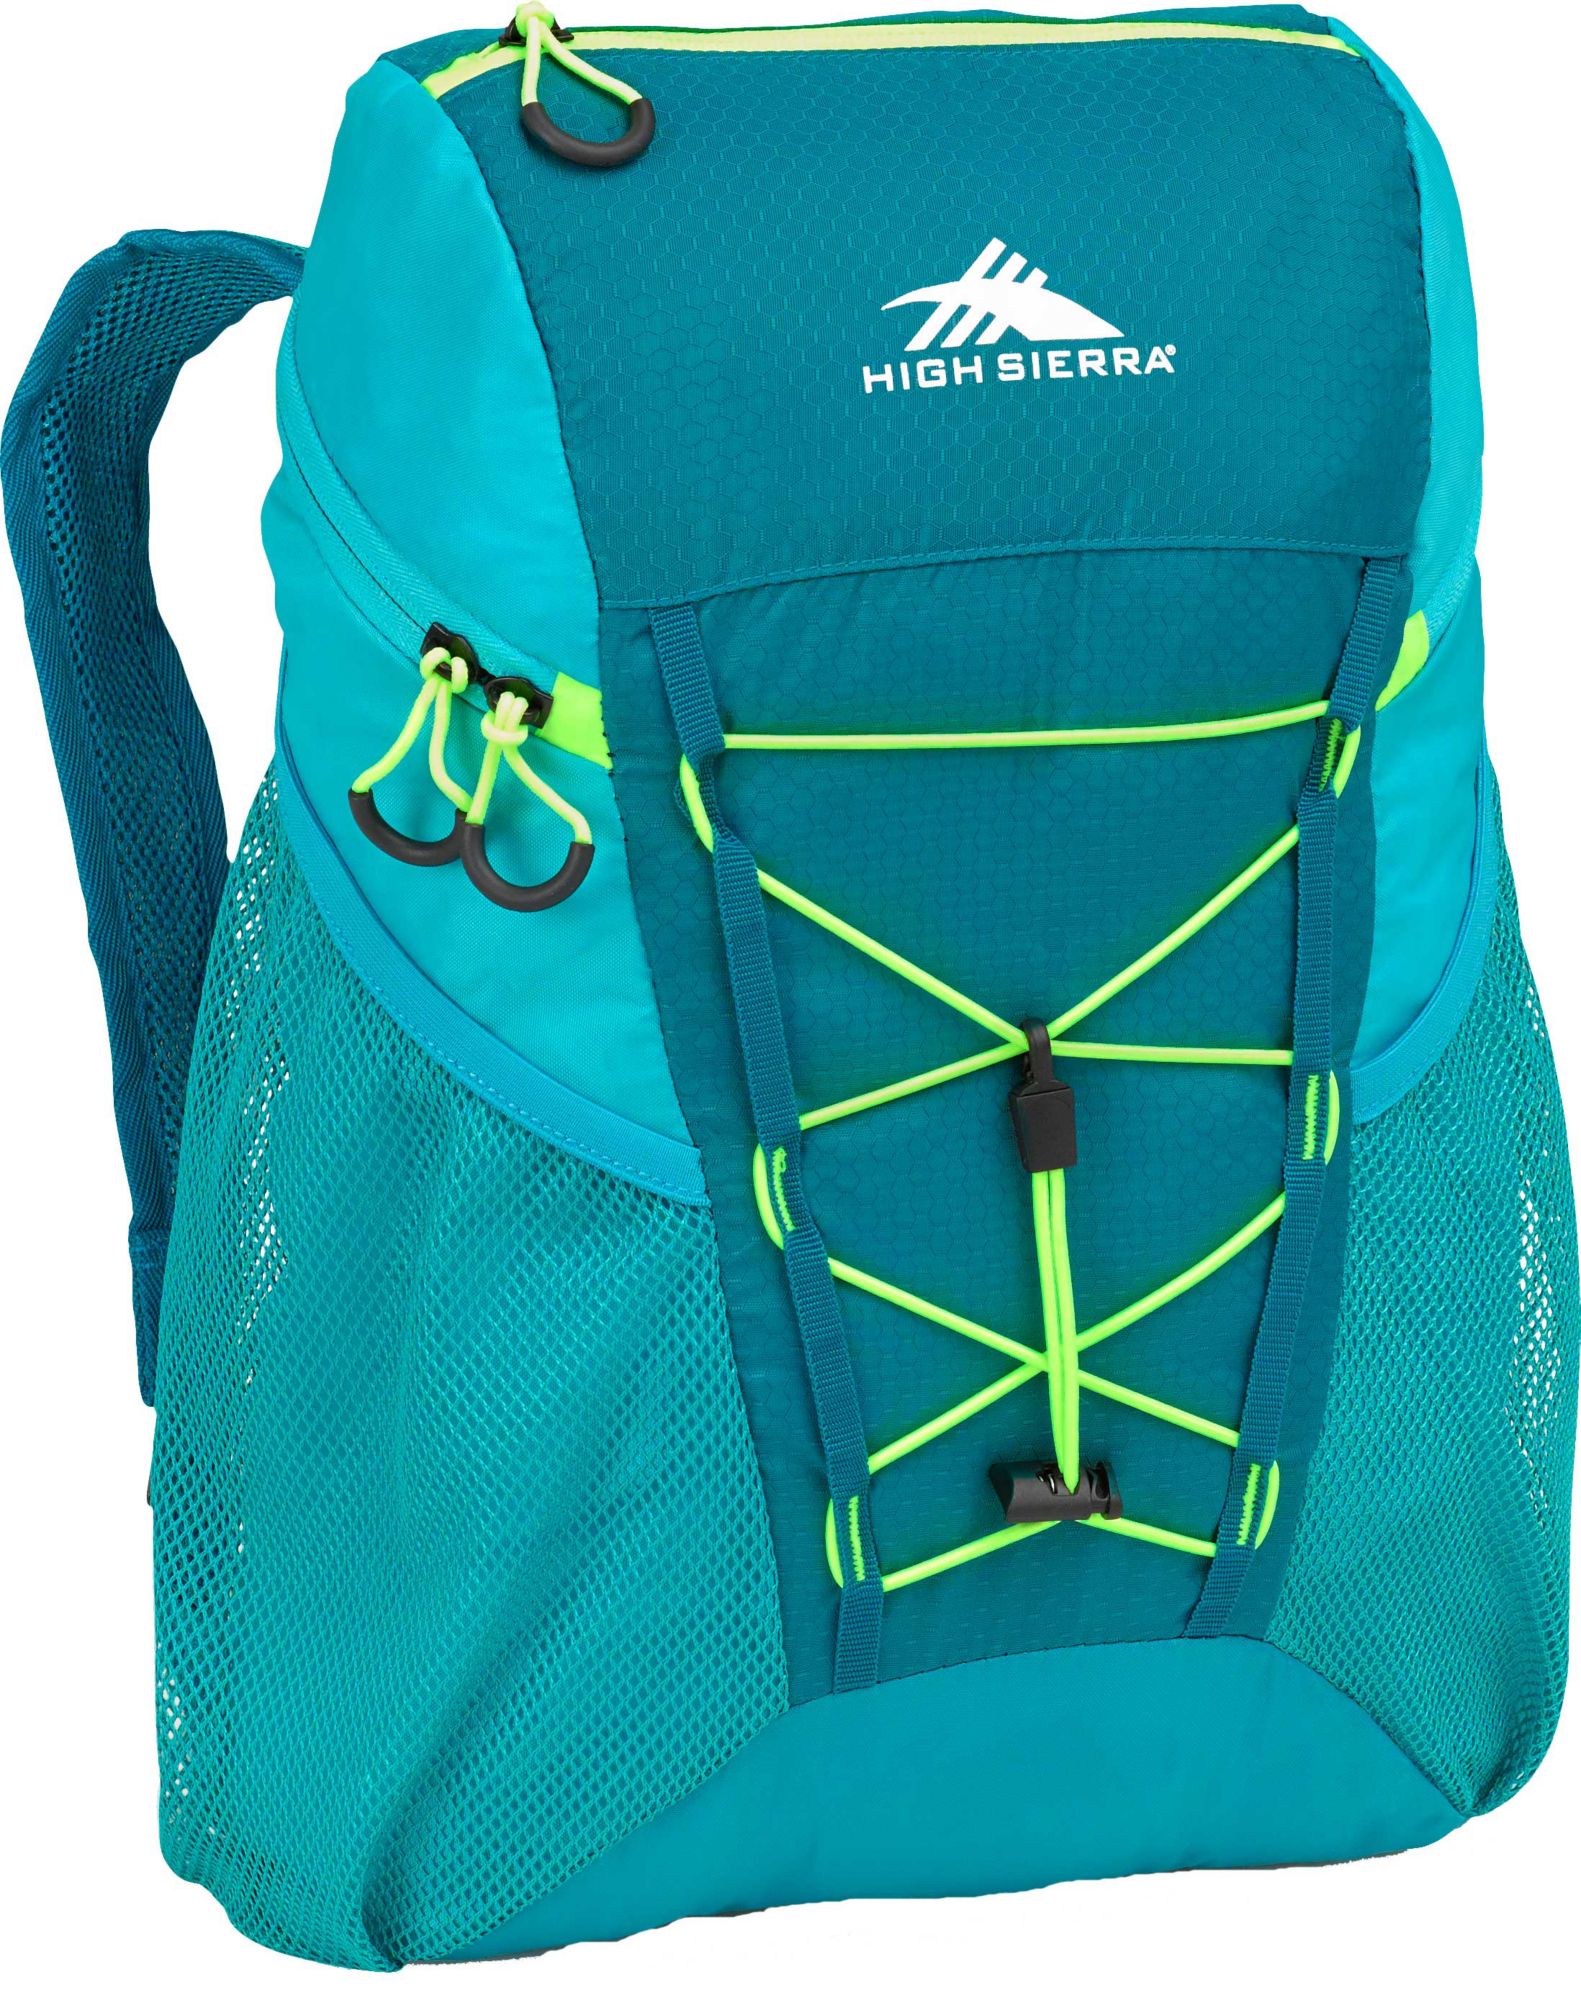 high sierra sport backpack